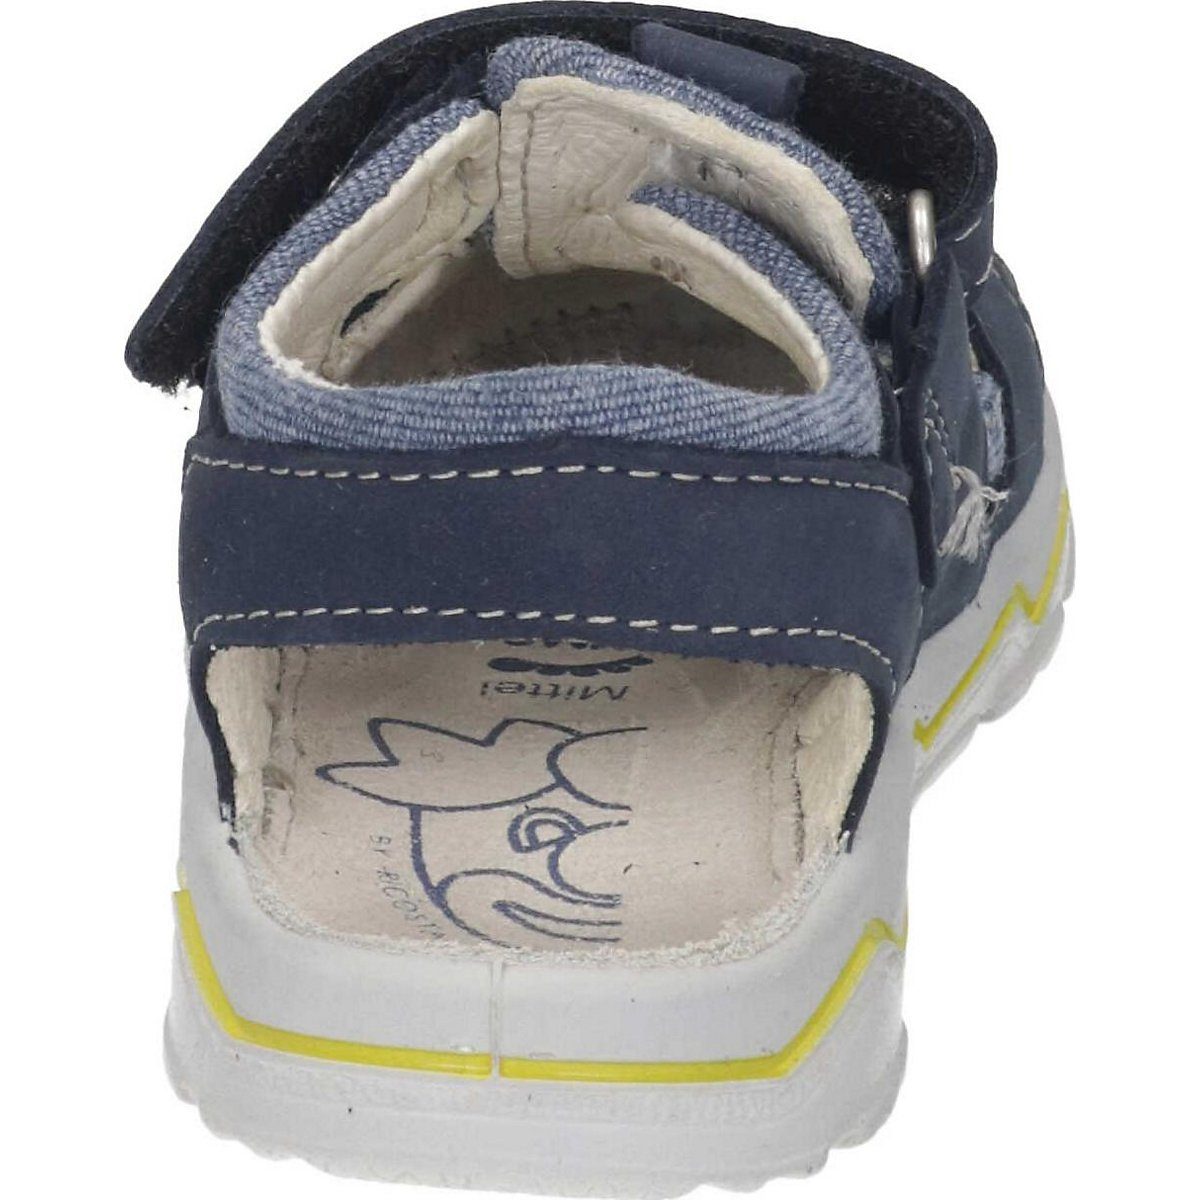 Schuhe Sandalen PEPINO by RICOSTA Outdoorsandalen für Jungen Outdoorsandale